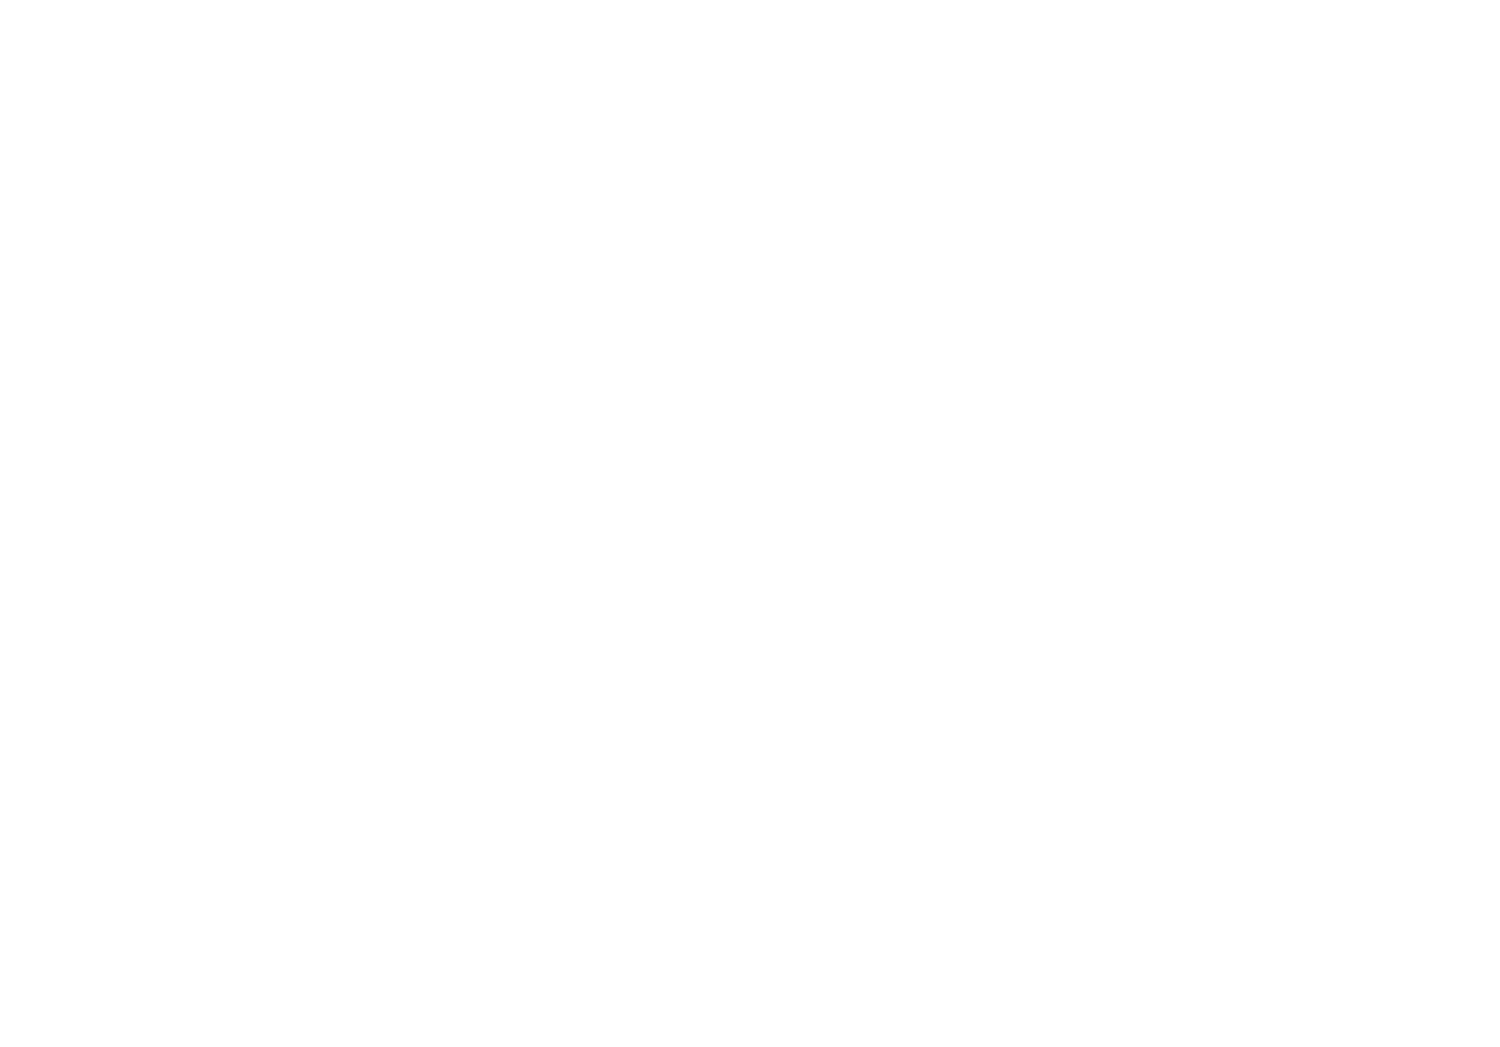 Okratron 5000